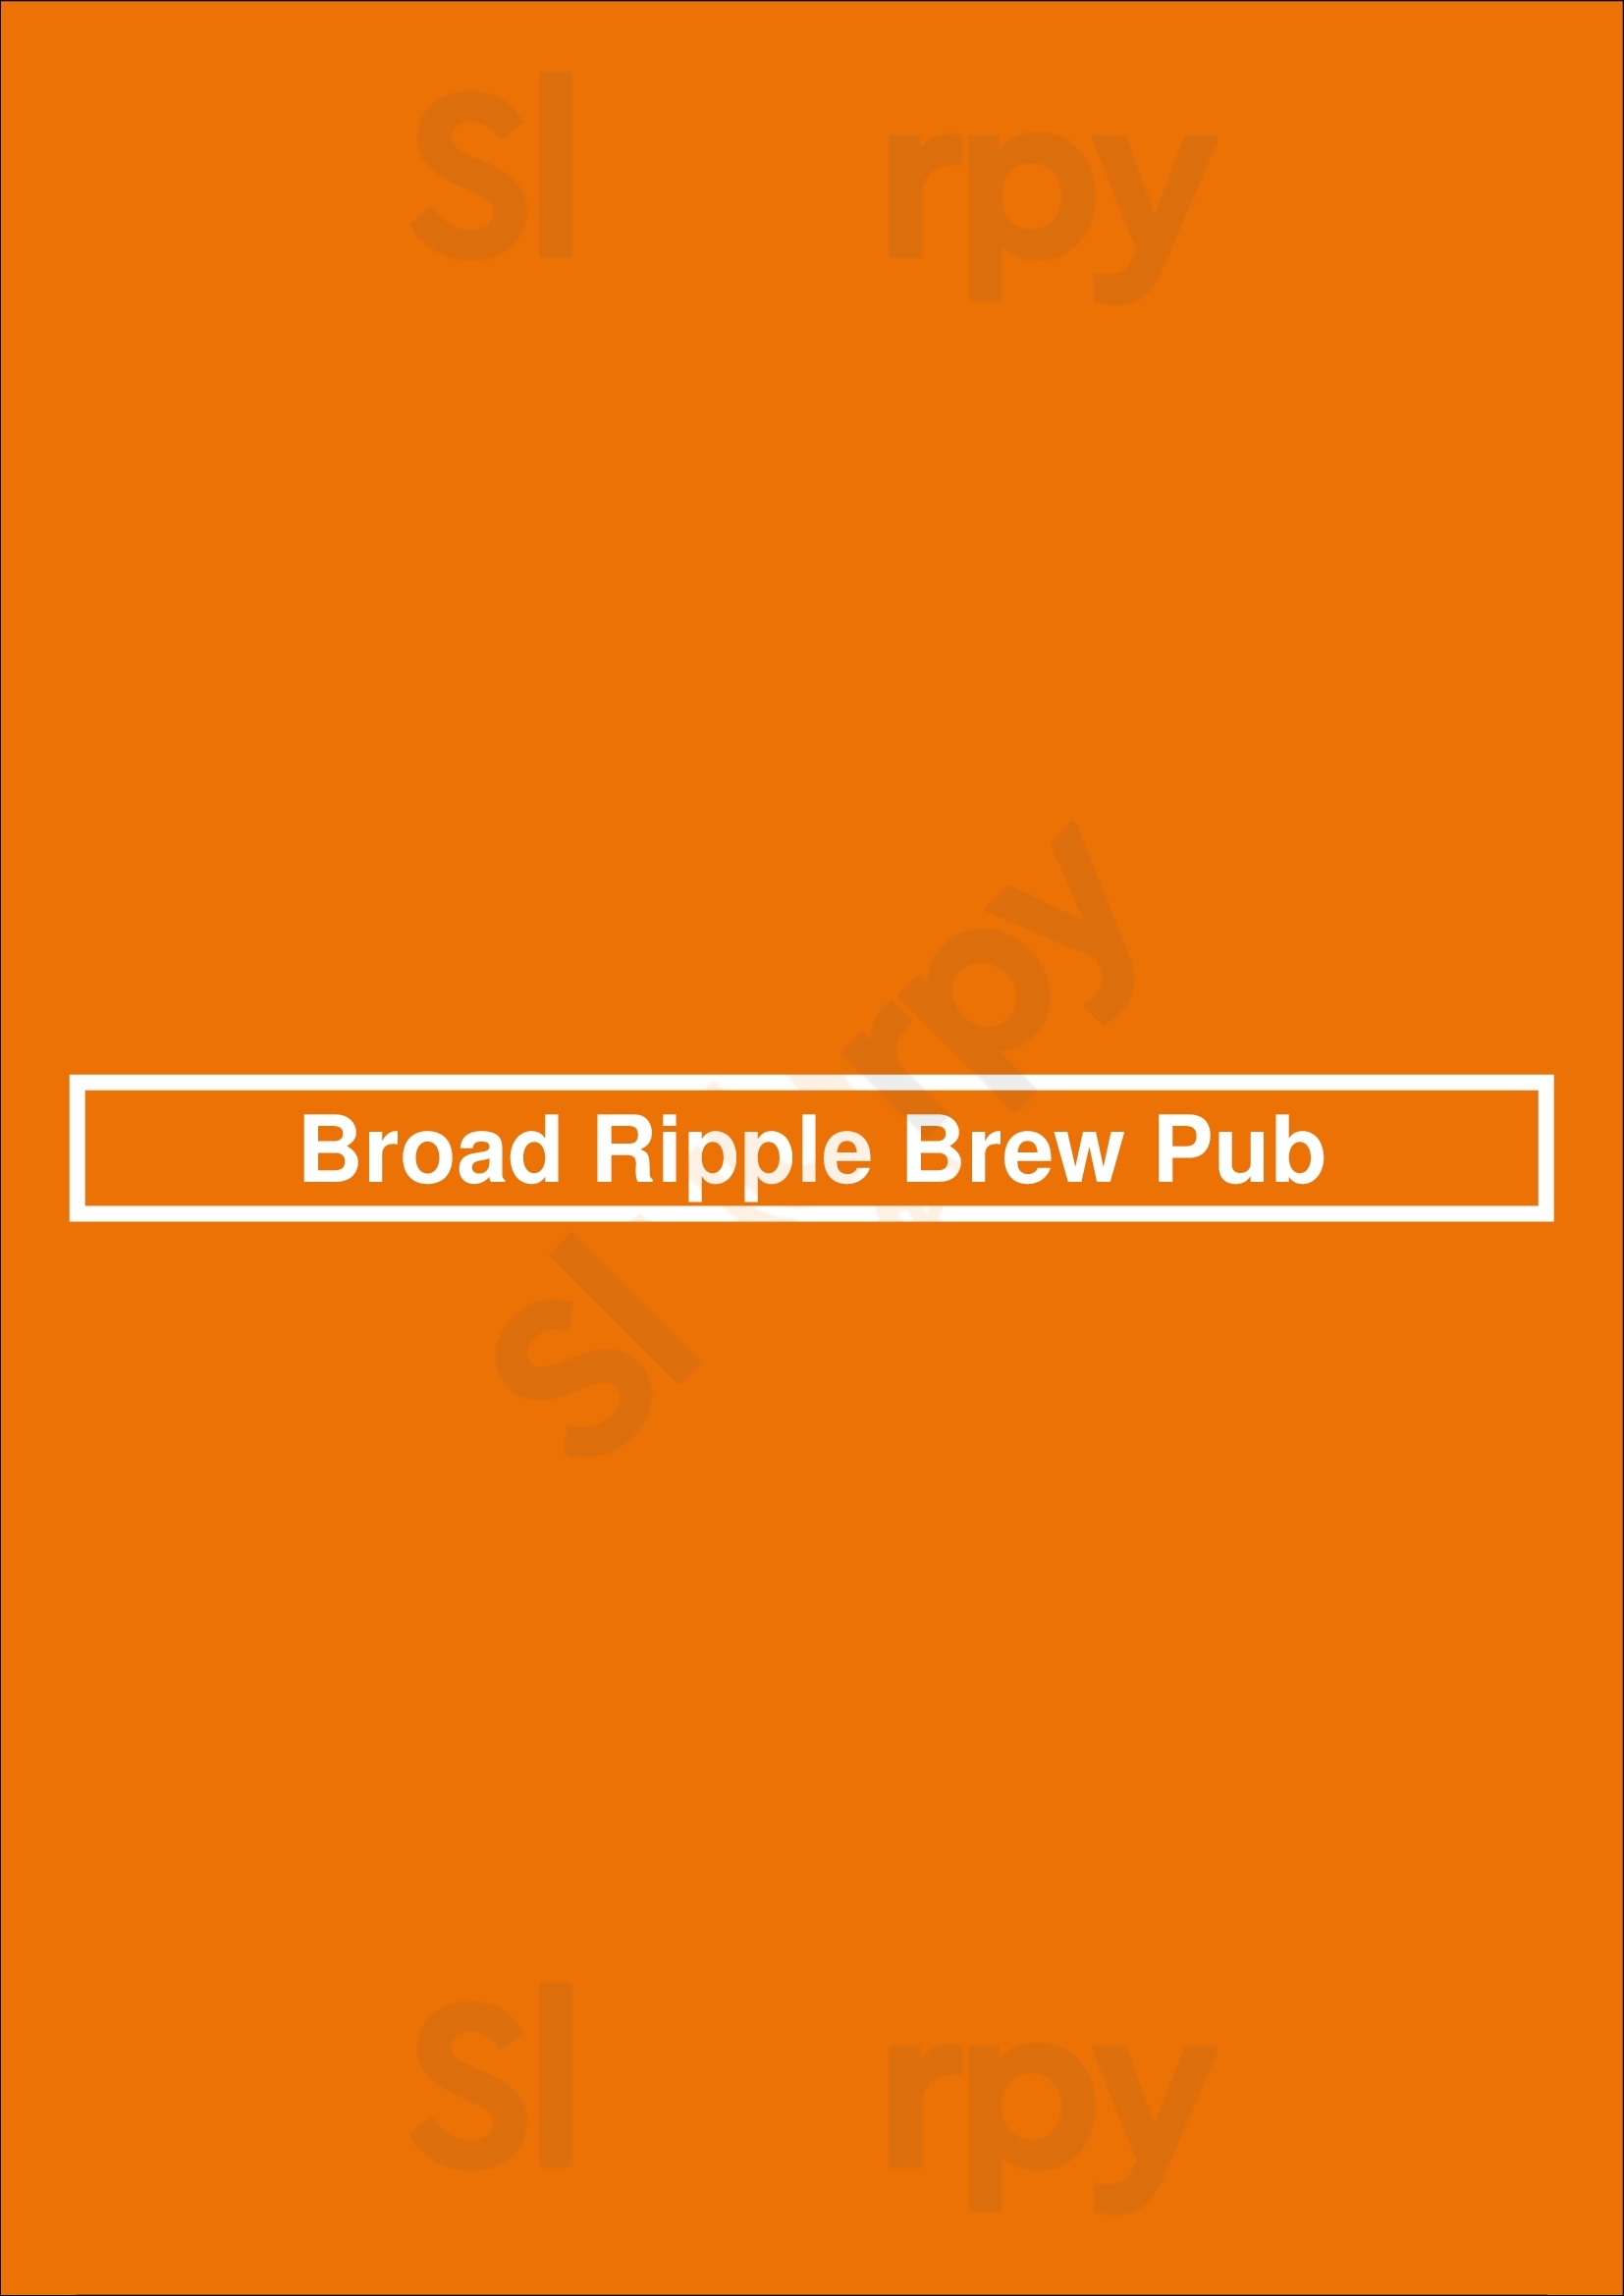 Broad Ripple Brew Pub Indianapolis Menu - 1